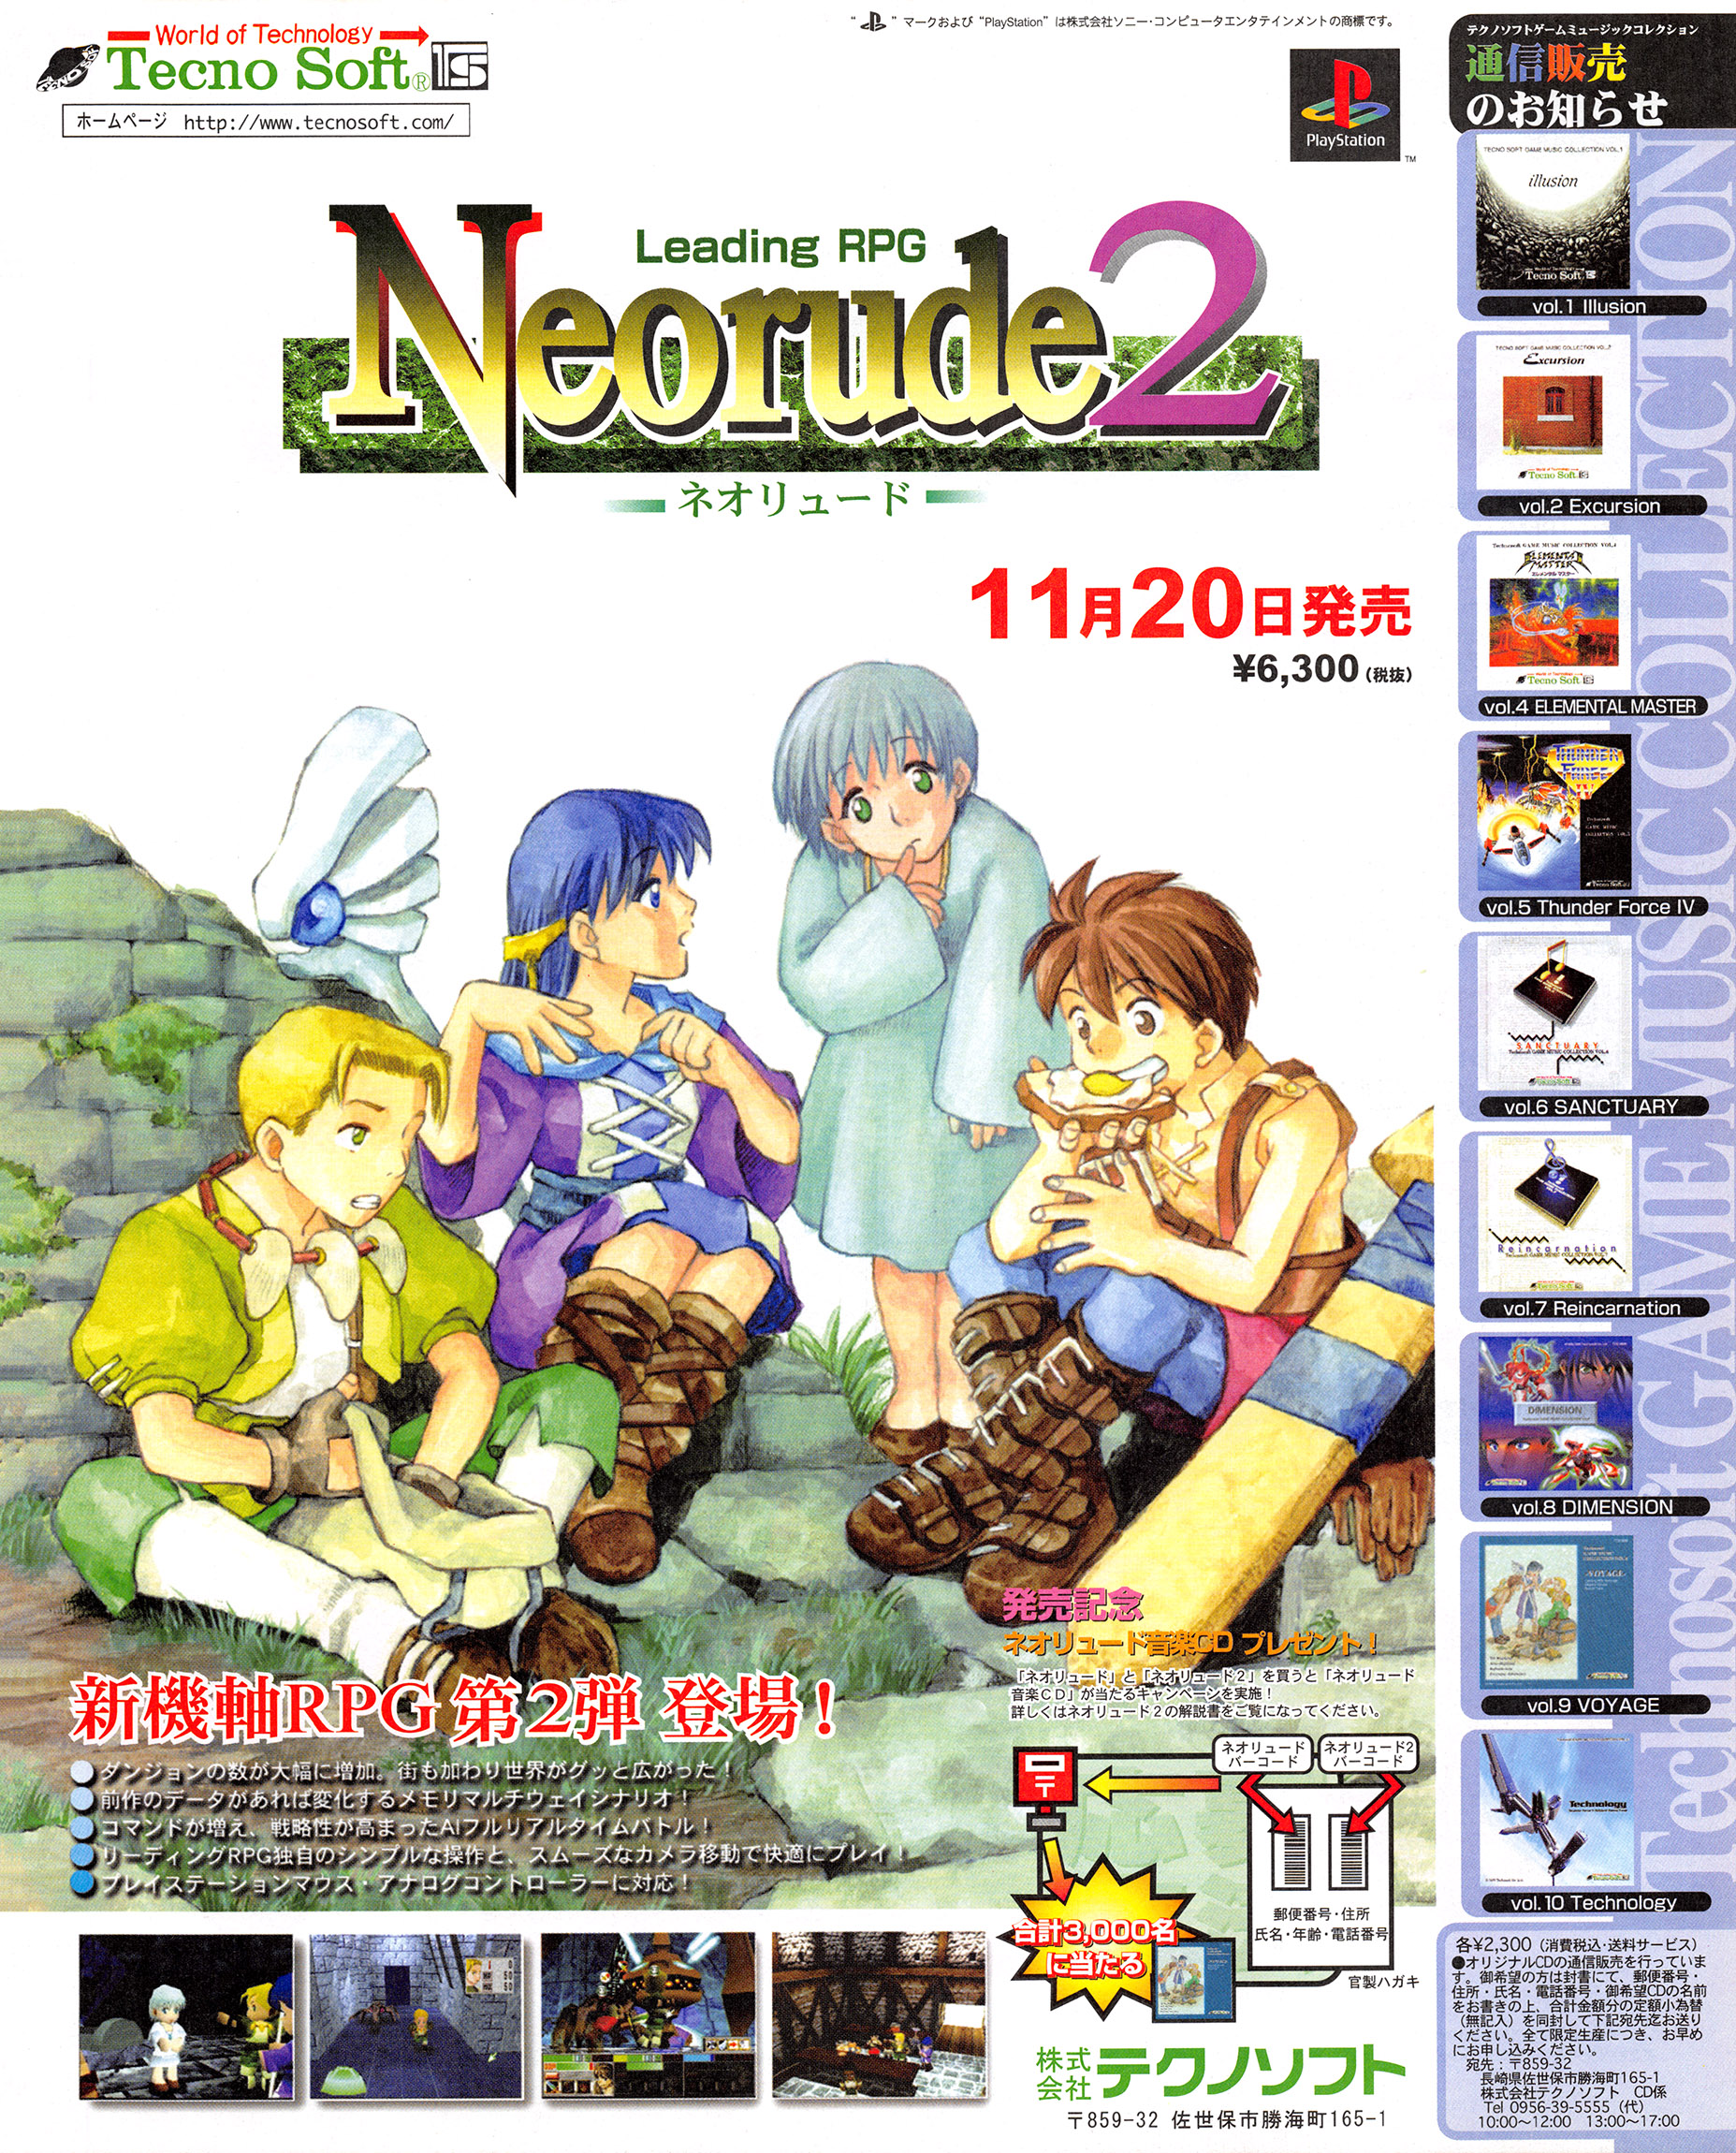 Neorude 2 PSX cover